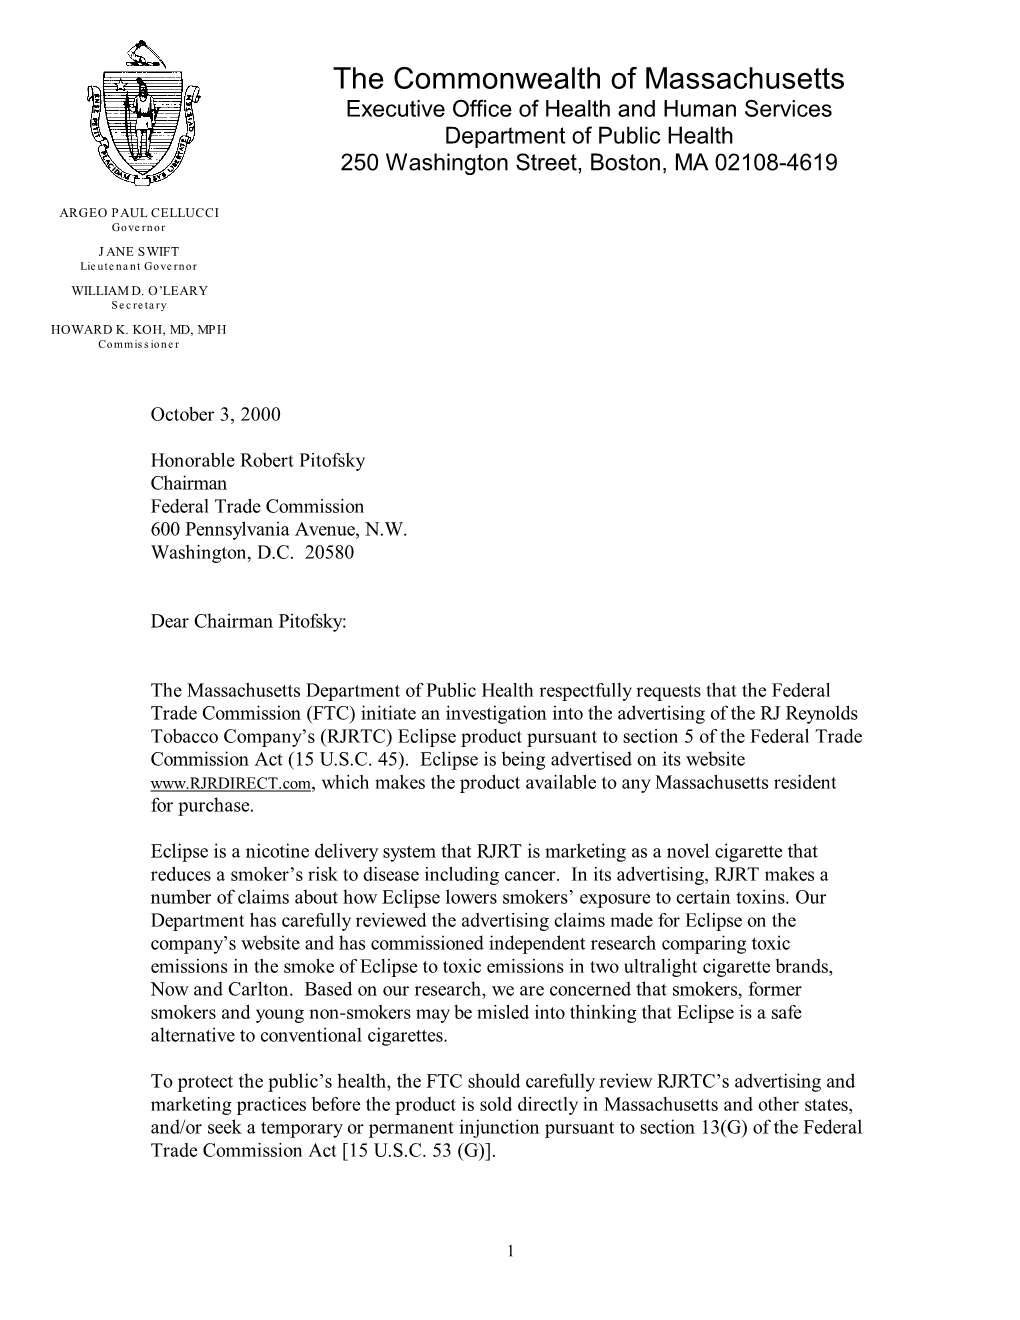 Massachusetts Letter to FTC Regarding Eclipse Cigarettes (PDF)